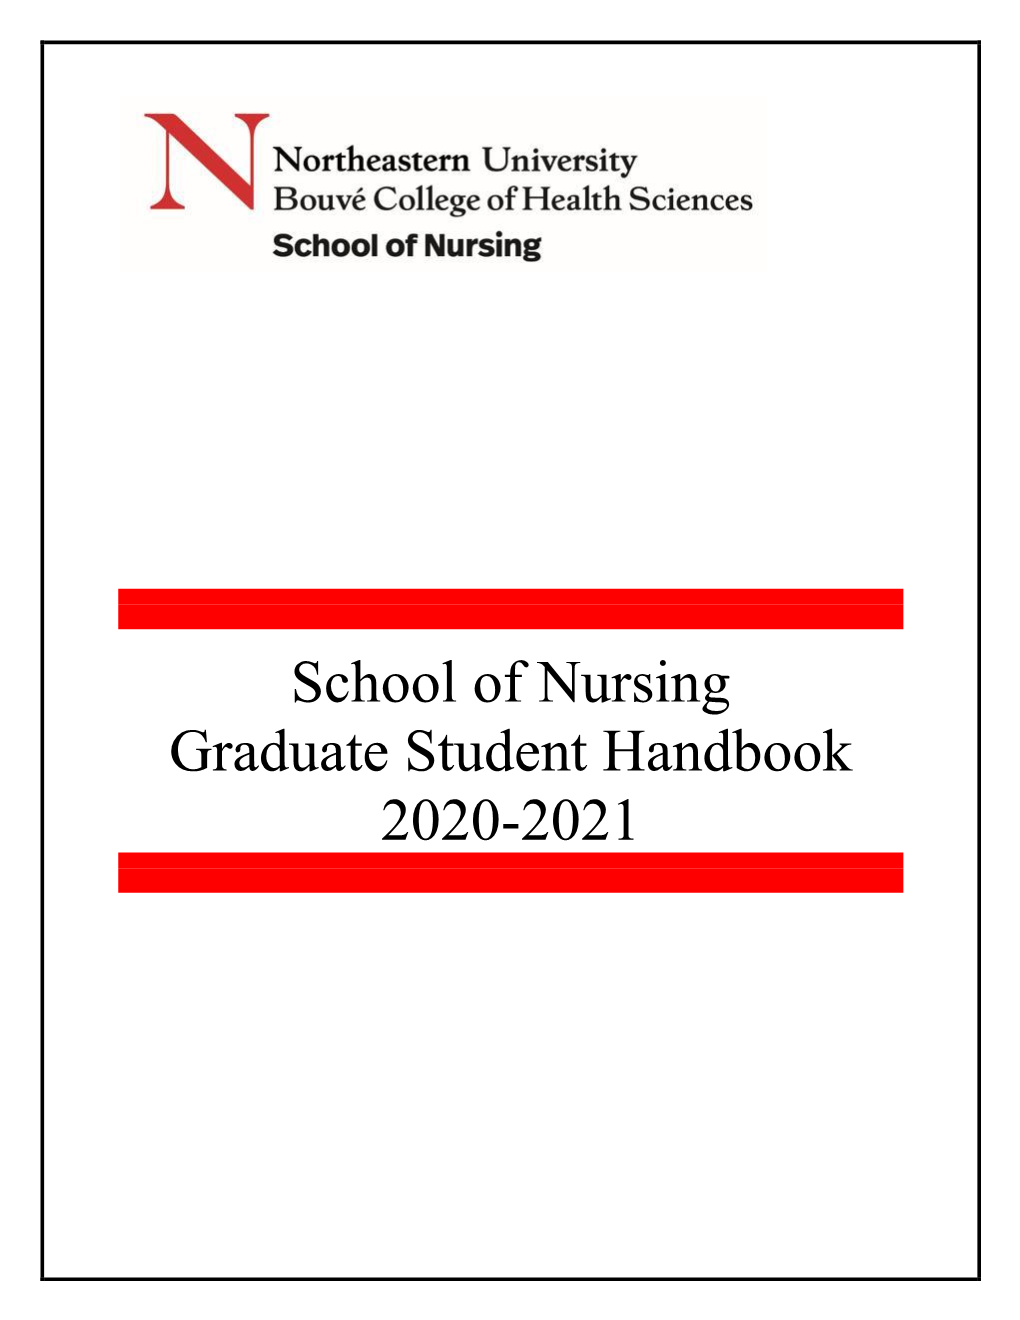 School of Nursing Graduate Student Handbook 2020-2021